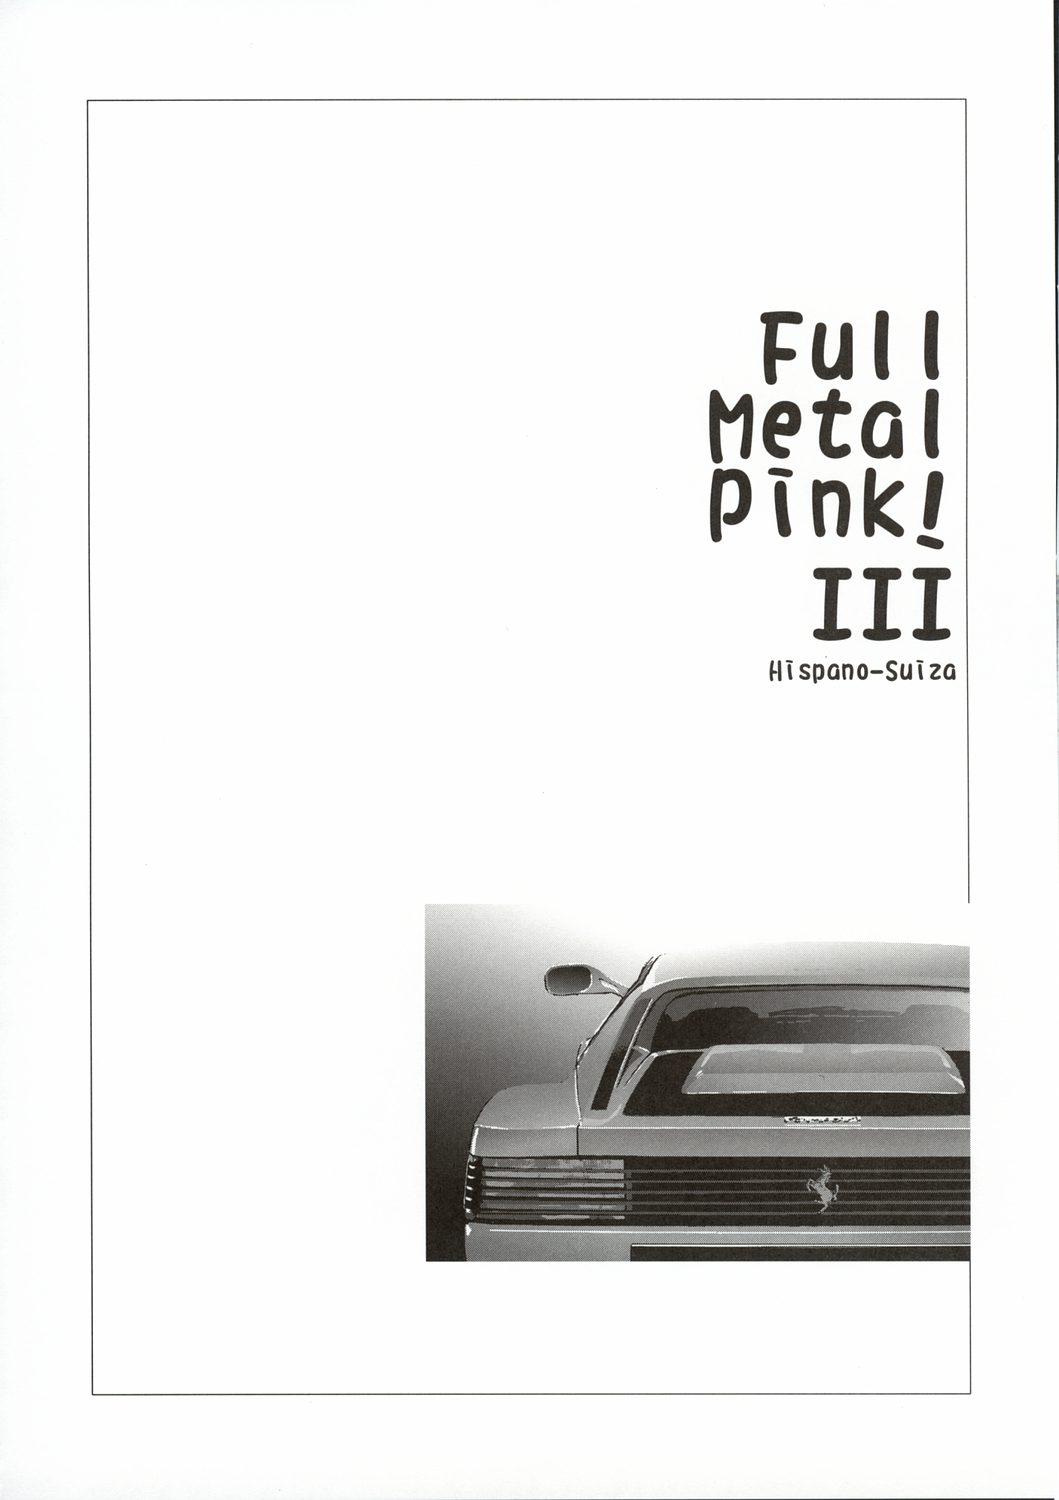 FULL METAL PINK! III 10